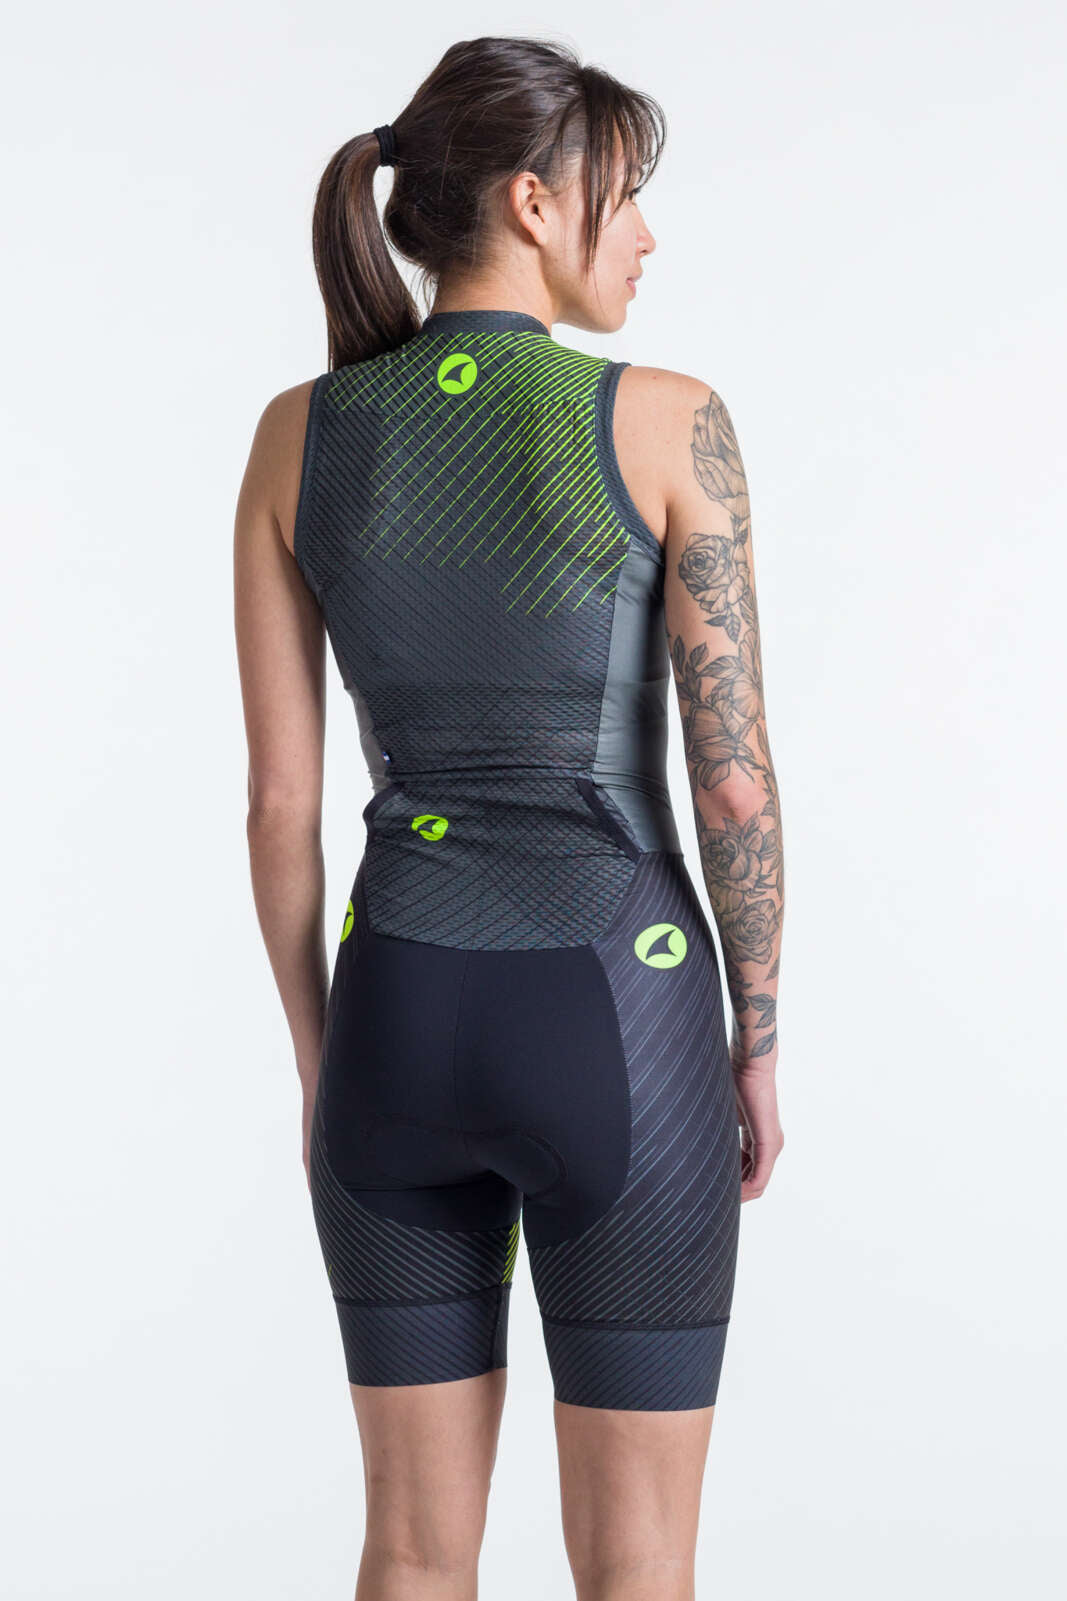 Women's Sleeveless Triathlon Suit - Black Back View